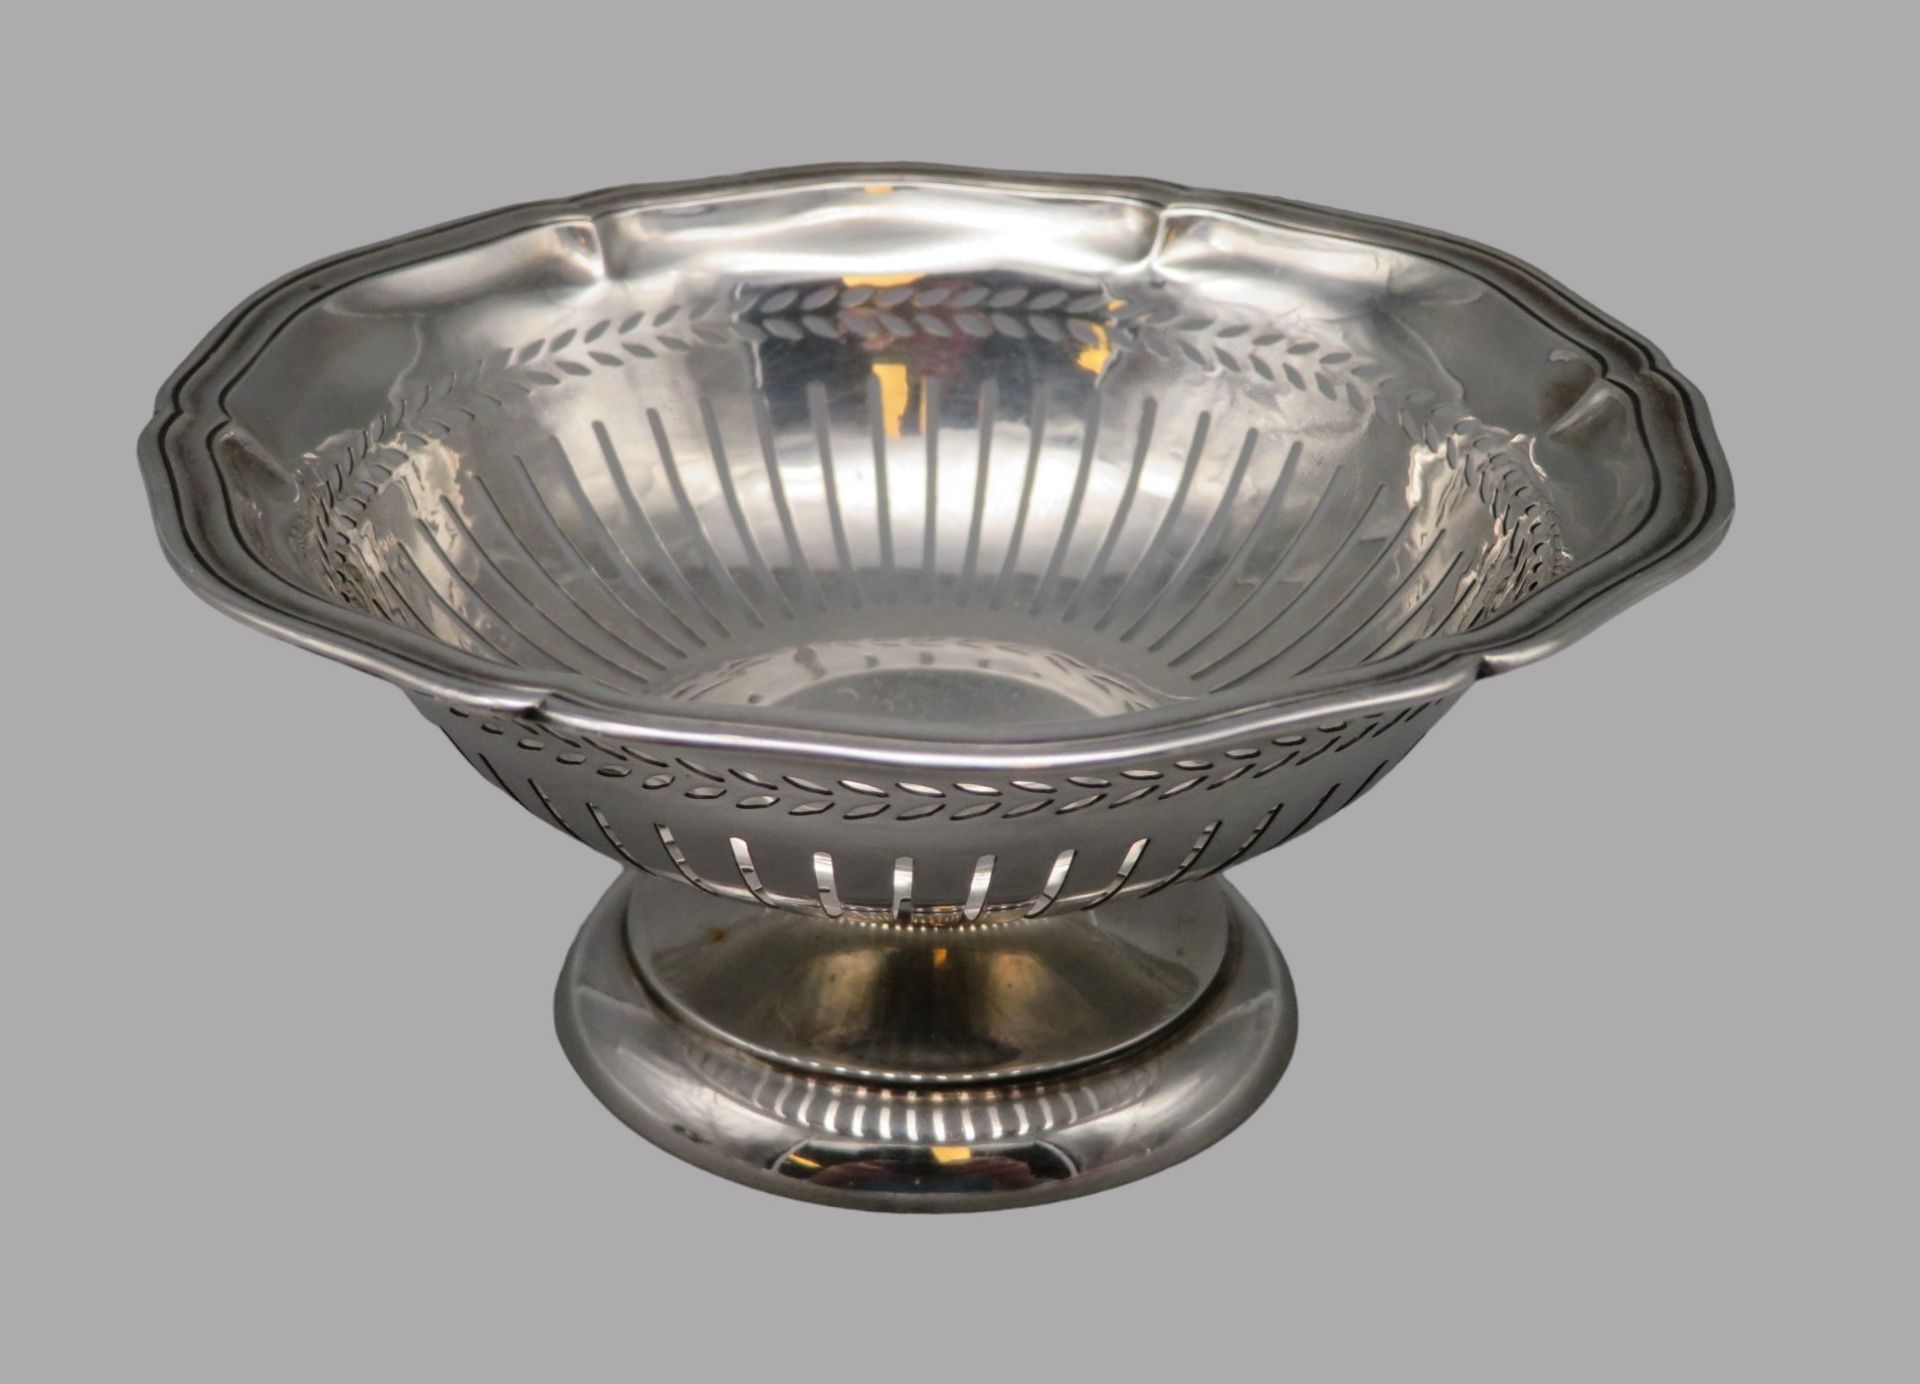 Schälchen, Deutsch, Silber 800/000, punziert, 70,6 g, h 5 cm, d 11 cm.